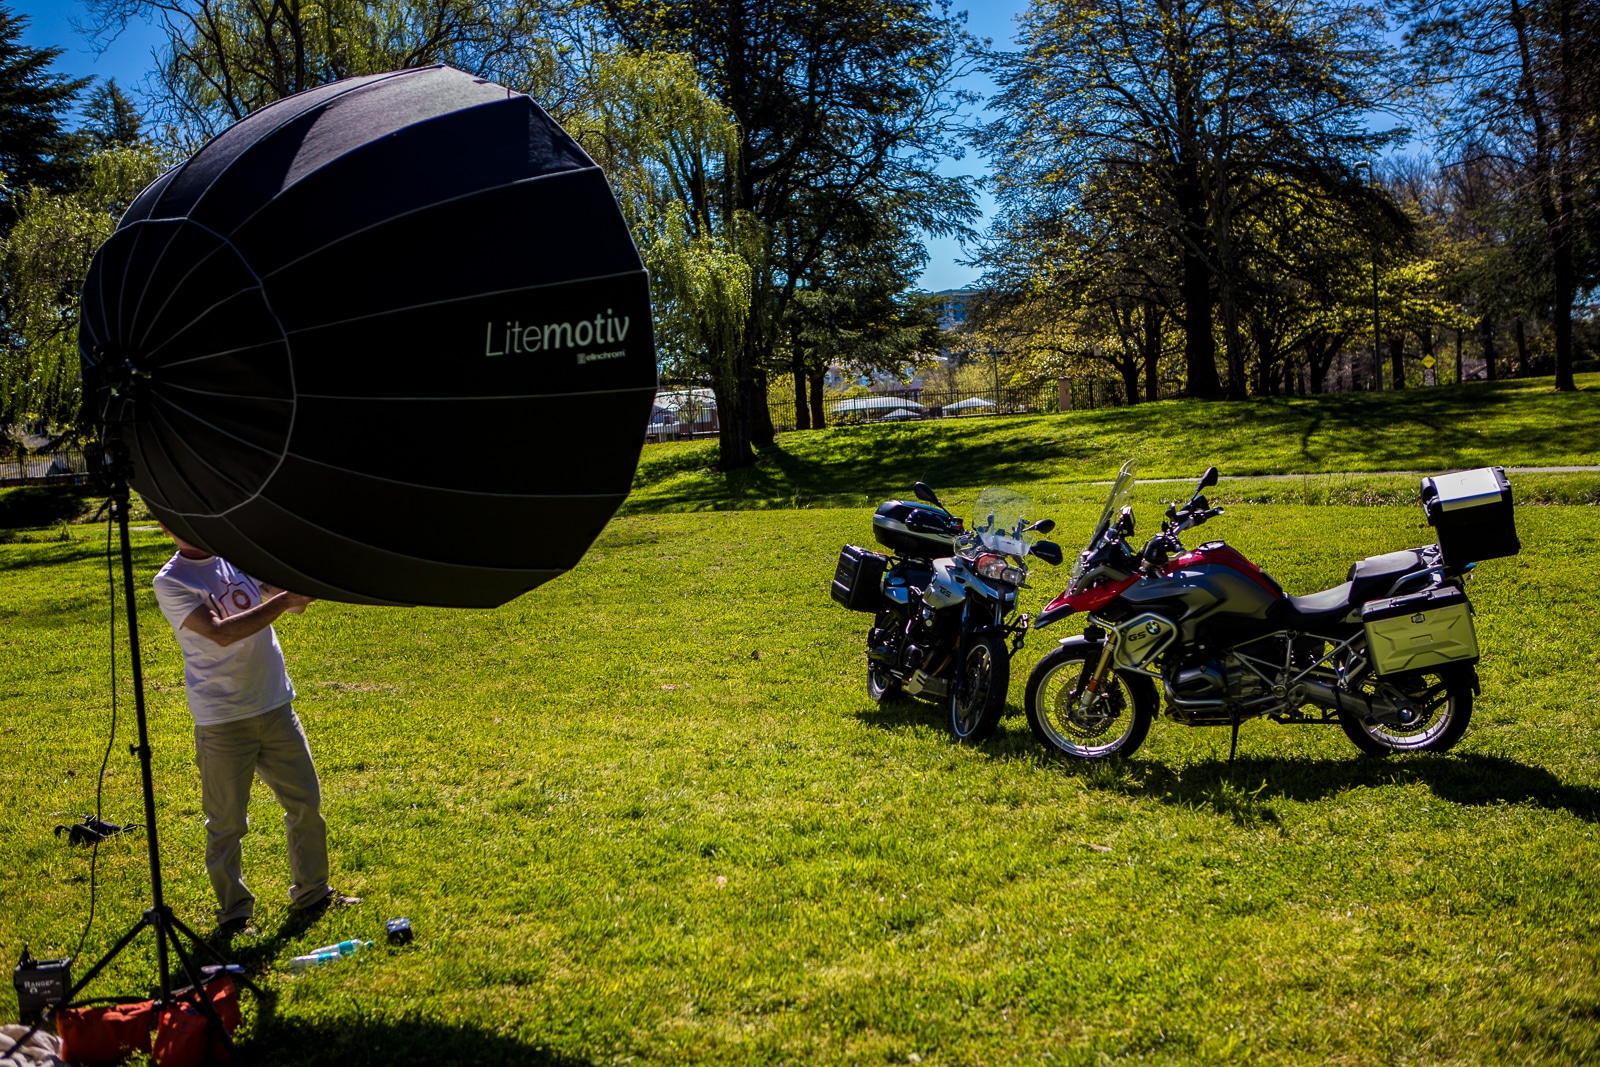 Elinchrom Litemotiv 190cm used to photograph multiple motorbikes in full midday sun.